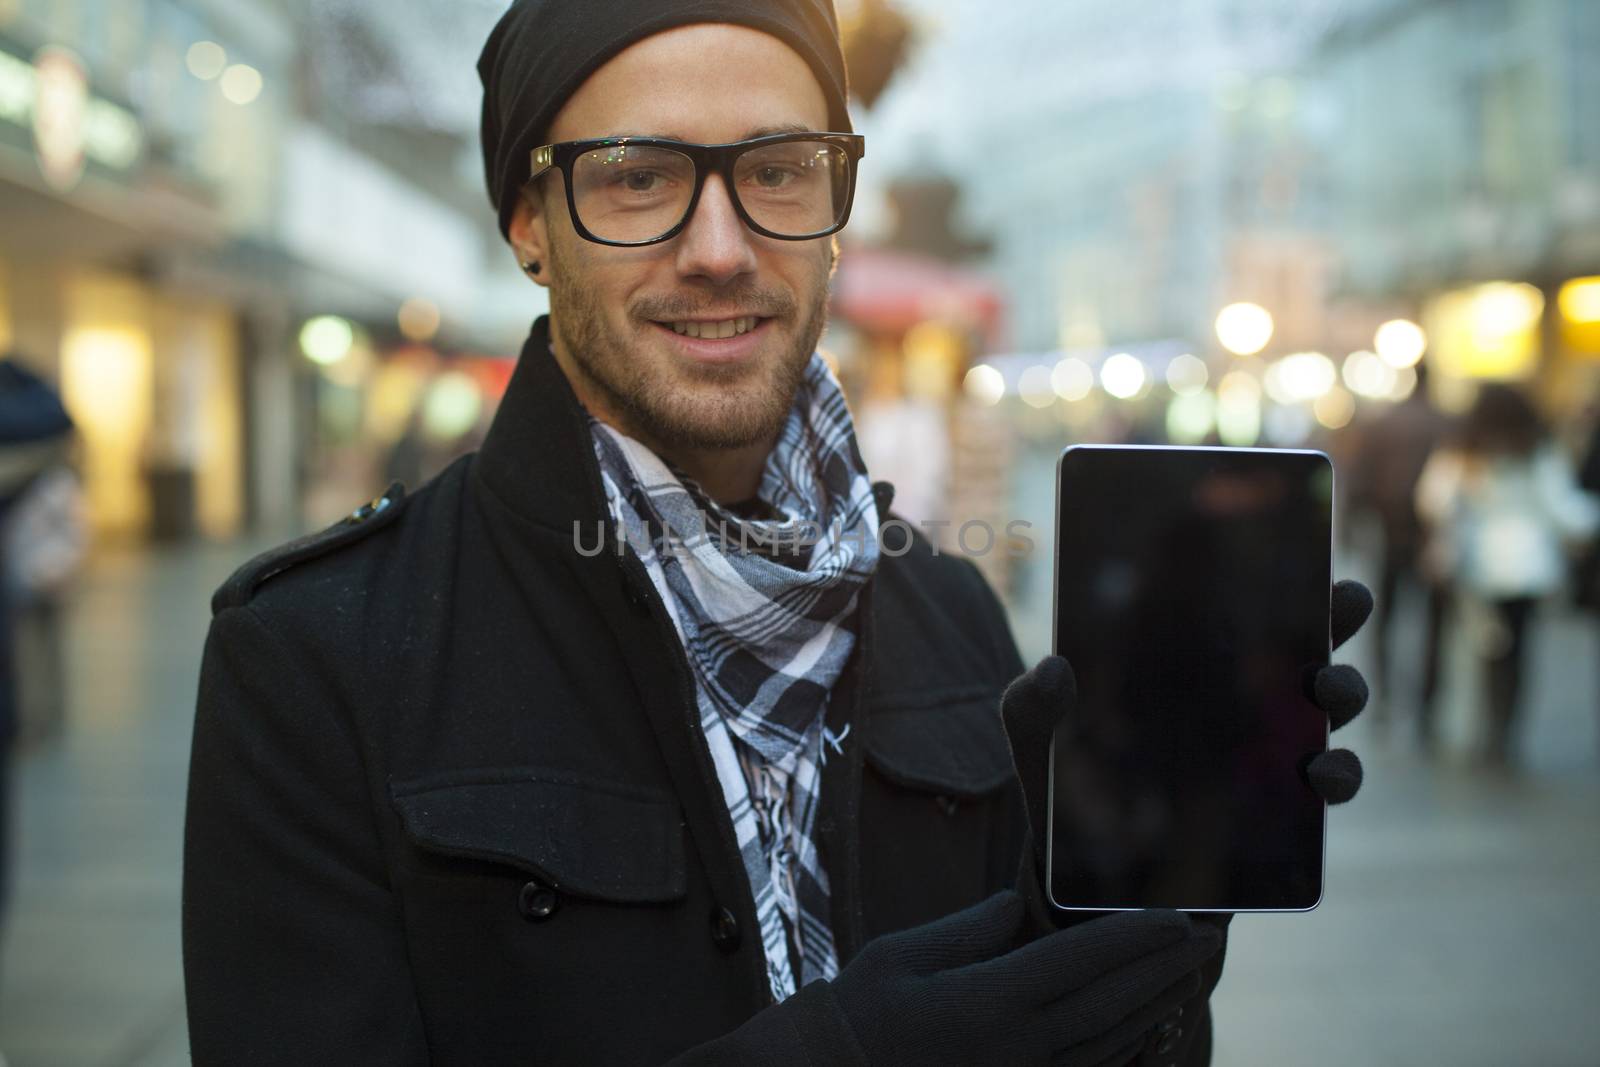 Urban man holdin tablet computer on street by adamr